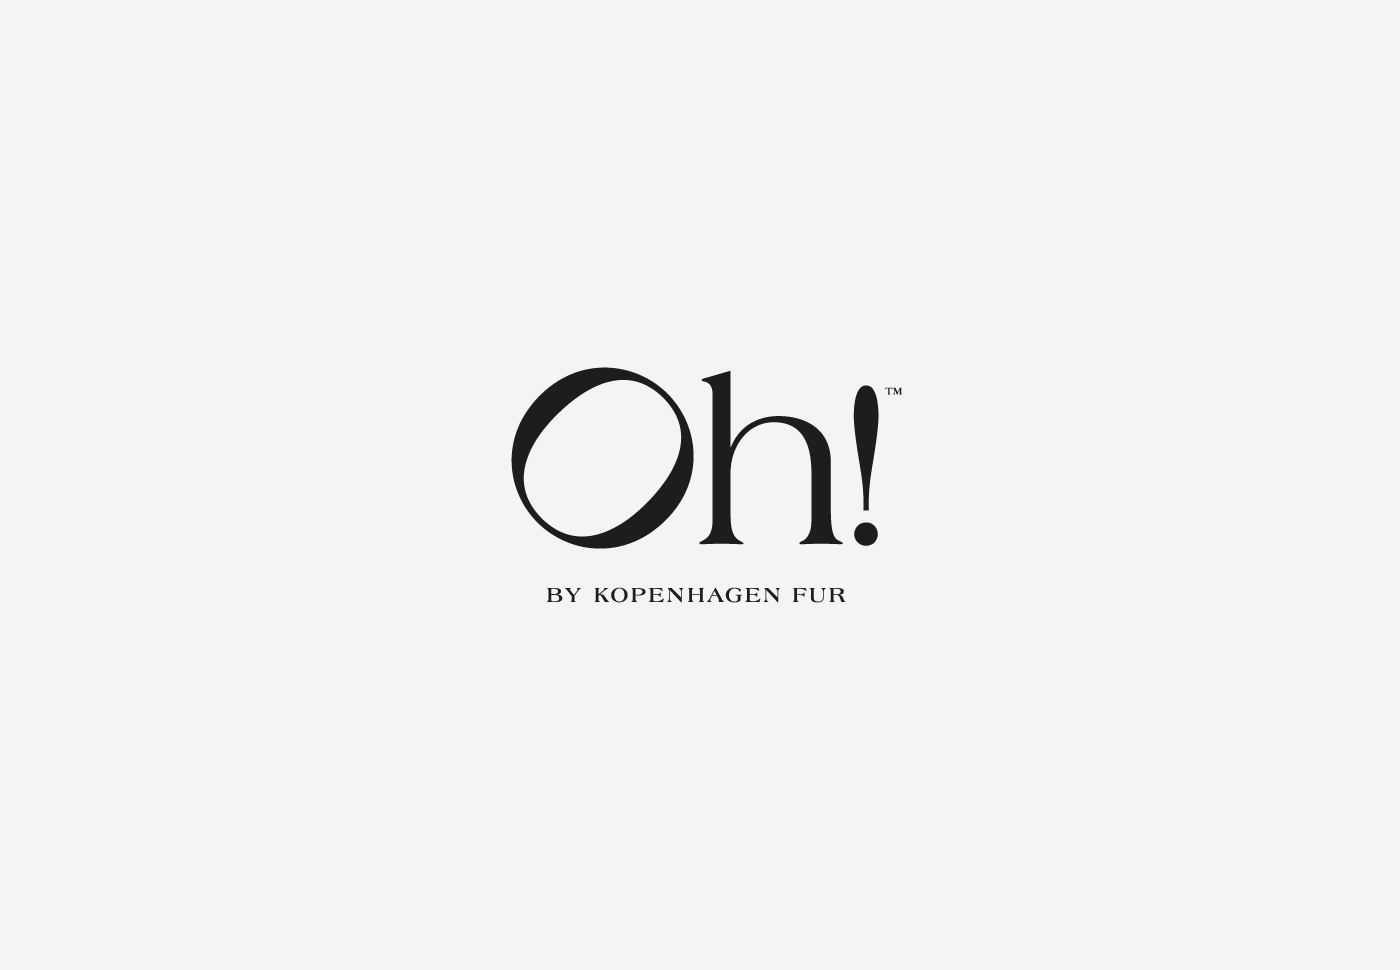 Oh! by Kopenhagen Fur – Naming and logo